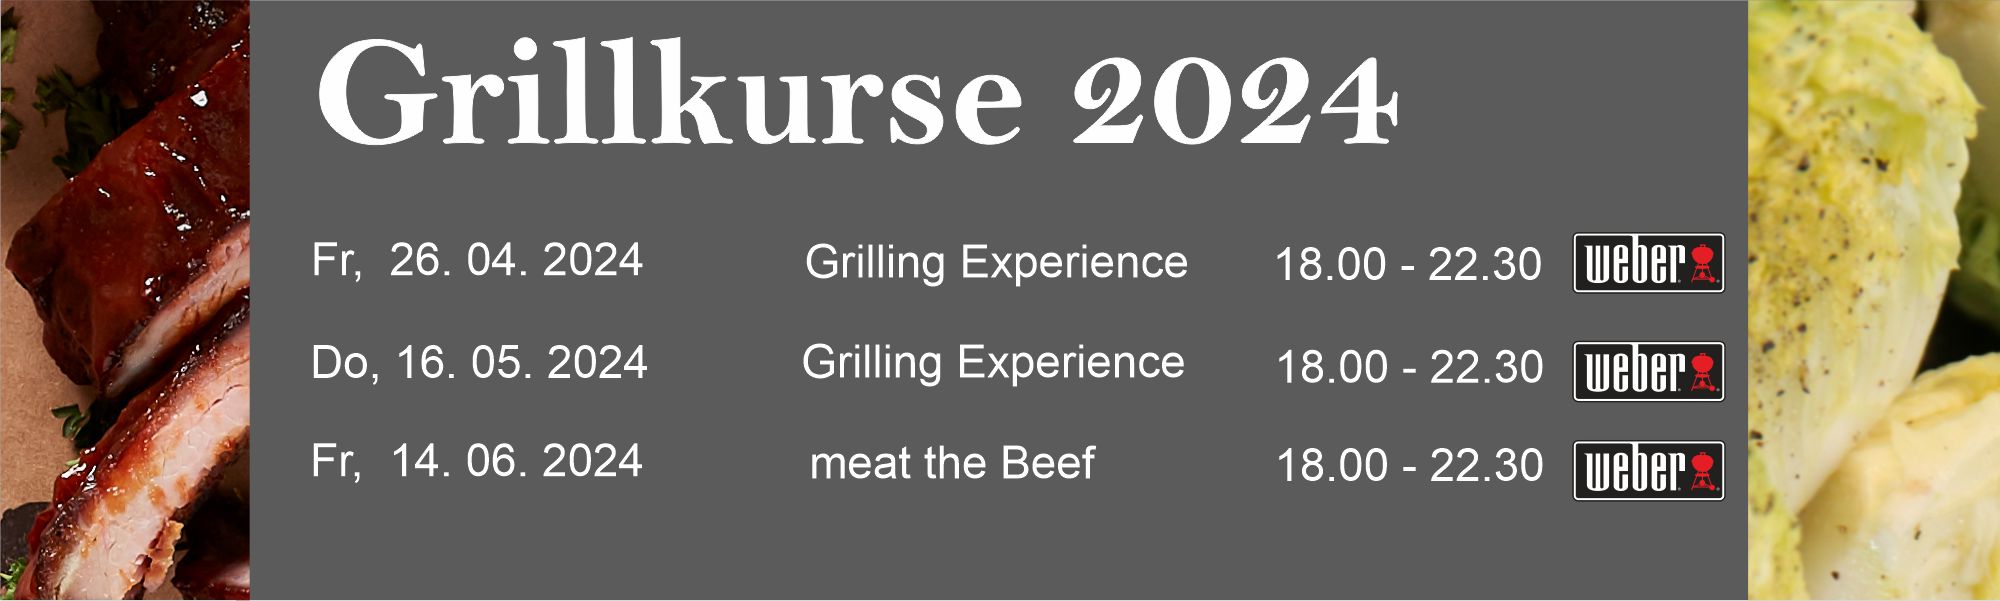 banner grillkurse 1 2024